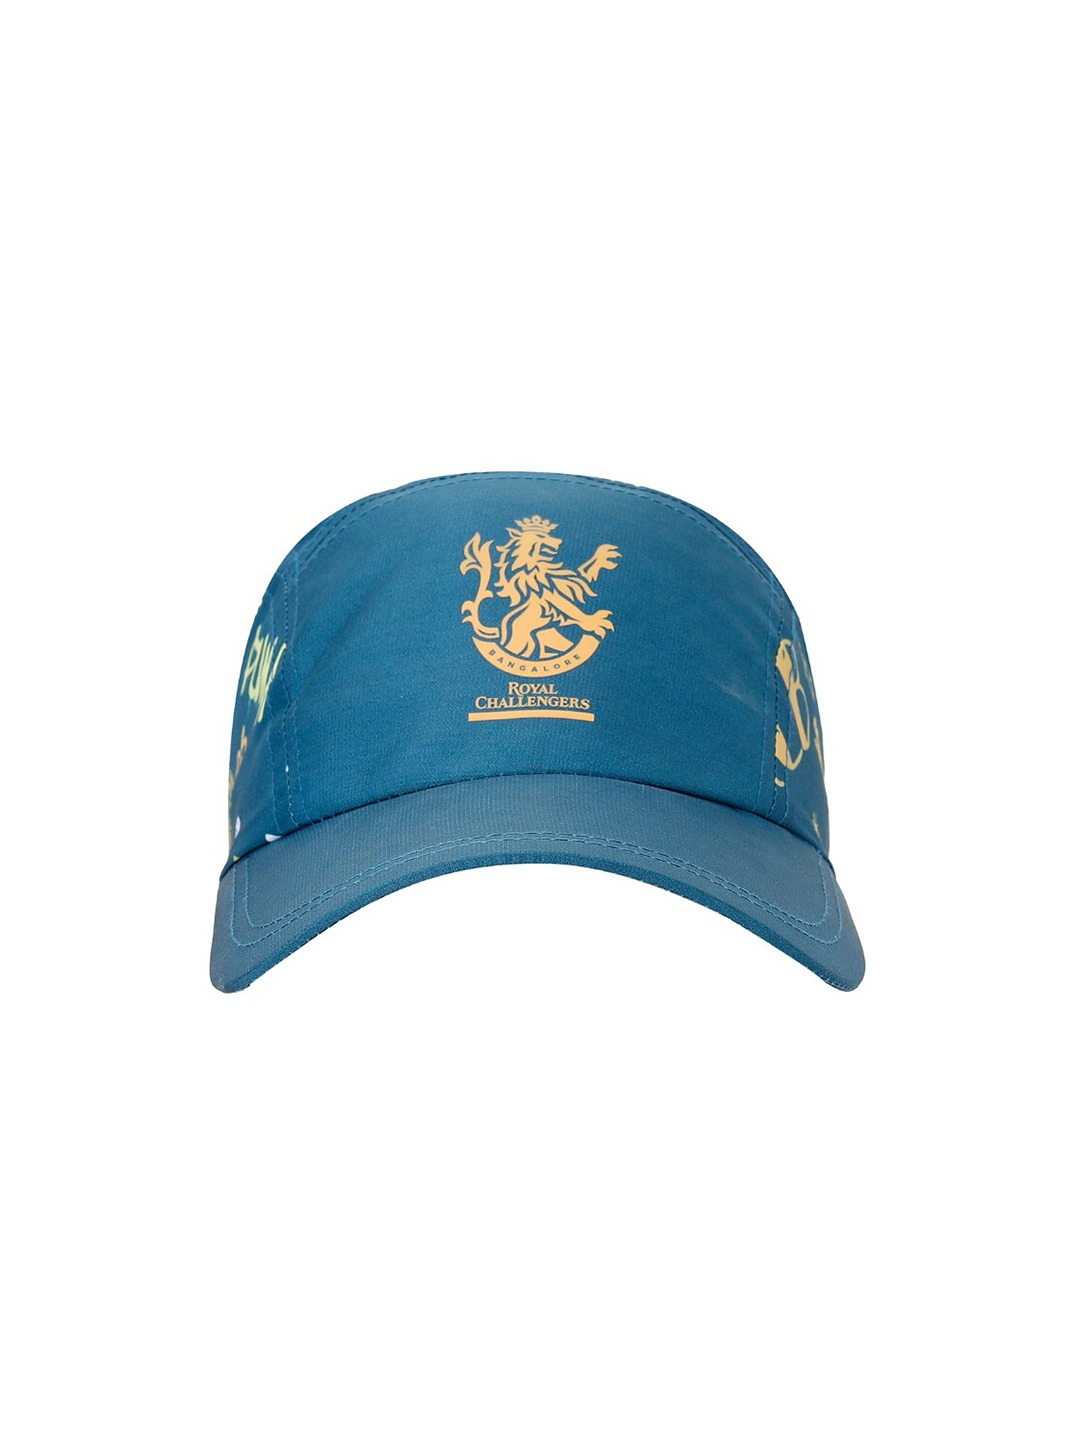 Accessories Caps | Puma Unisex Blue & Beige Printed x RCB 5 Panel Baseball Cap - DV38638